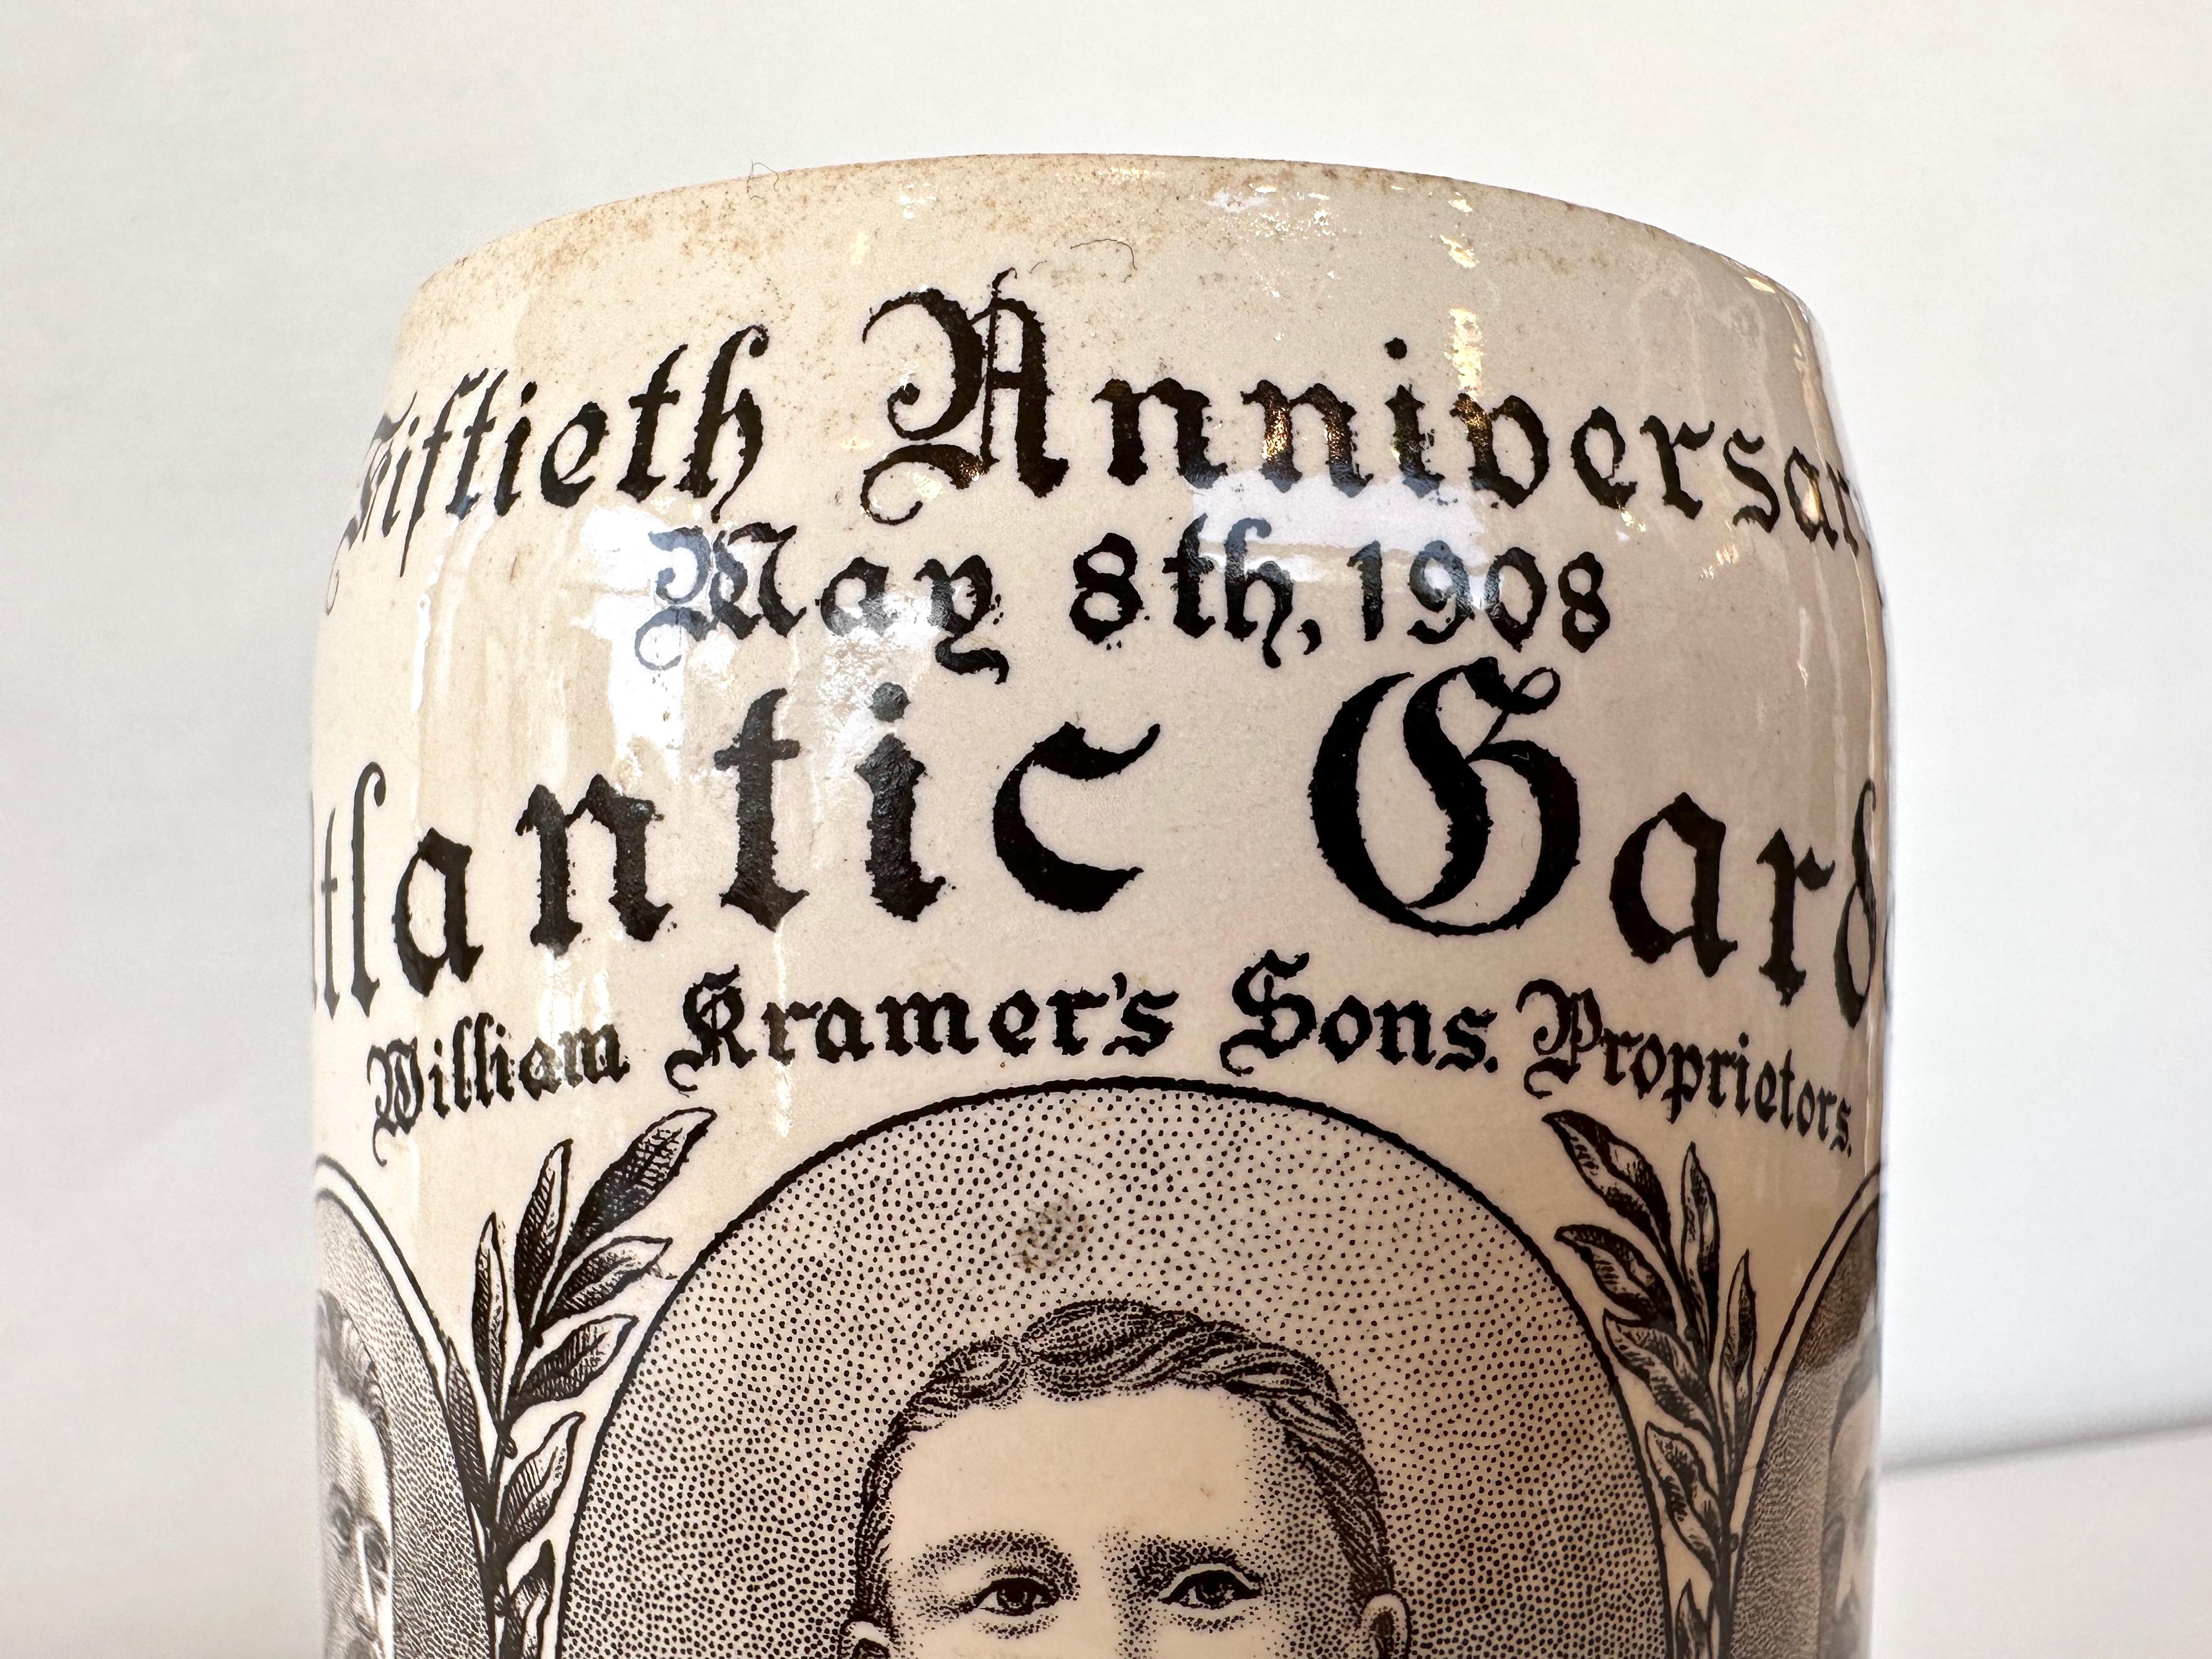 Villeroy & Boch 1908 Atlantic Garden 50th Anniversary Commemorative Beer Stein For Sale 1